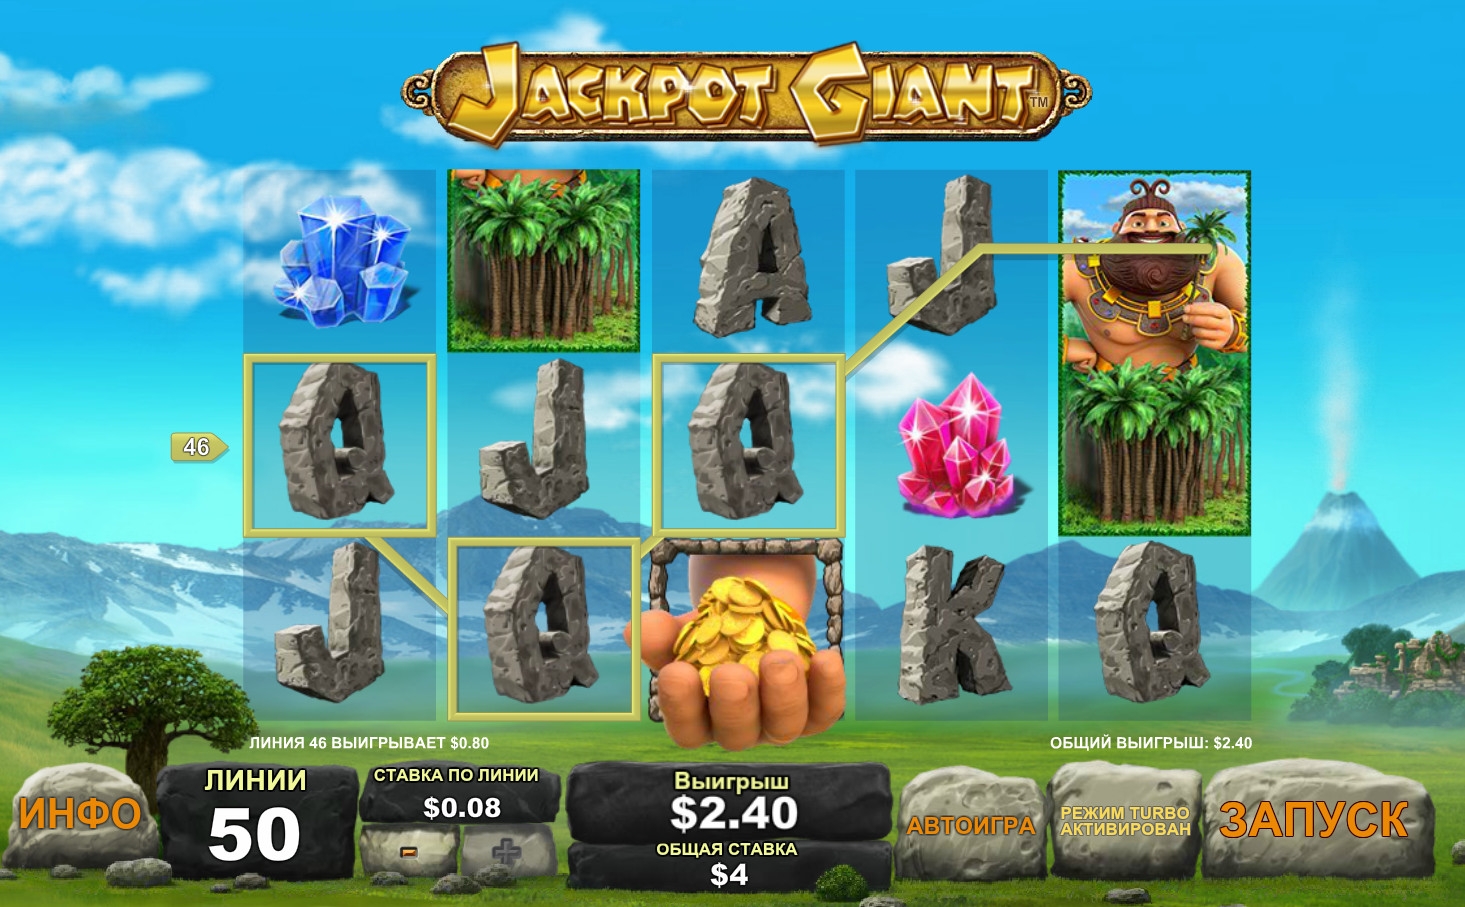 Jackpot Giant (Jackpot Giant) from category Slots